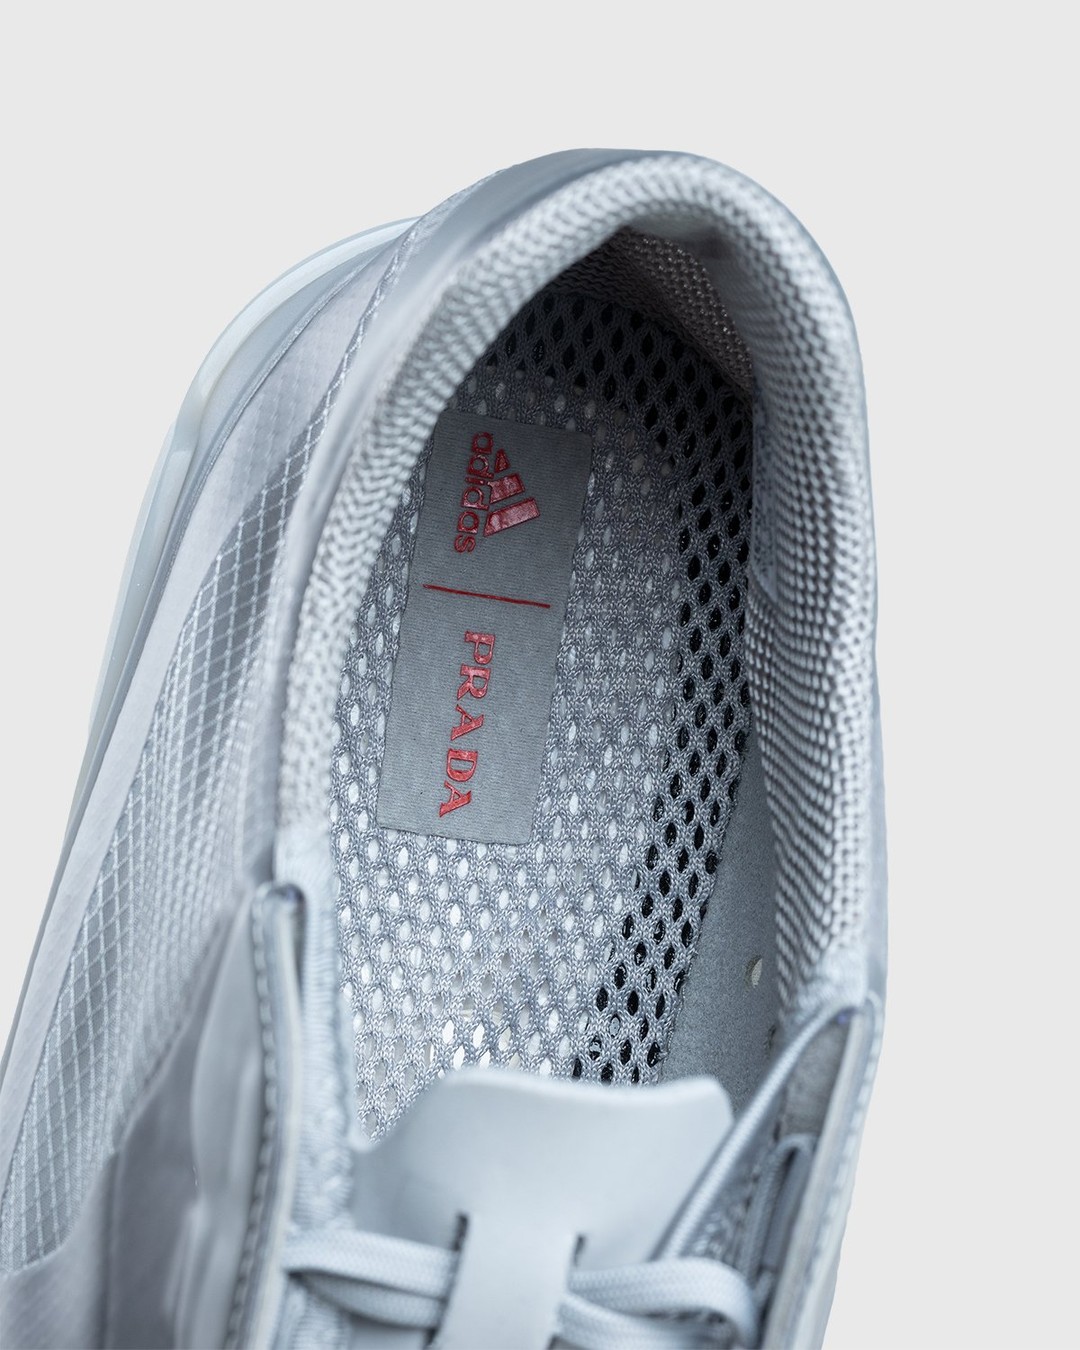 Adidas x Prada – A+P Luna Rossa 21 Performance - Sneakers - Grey - Image 6